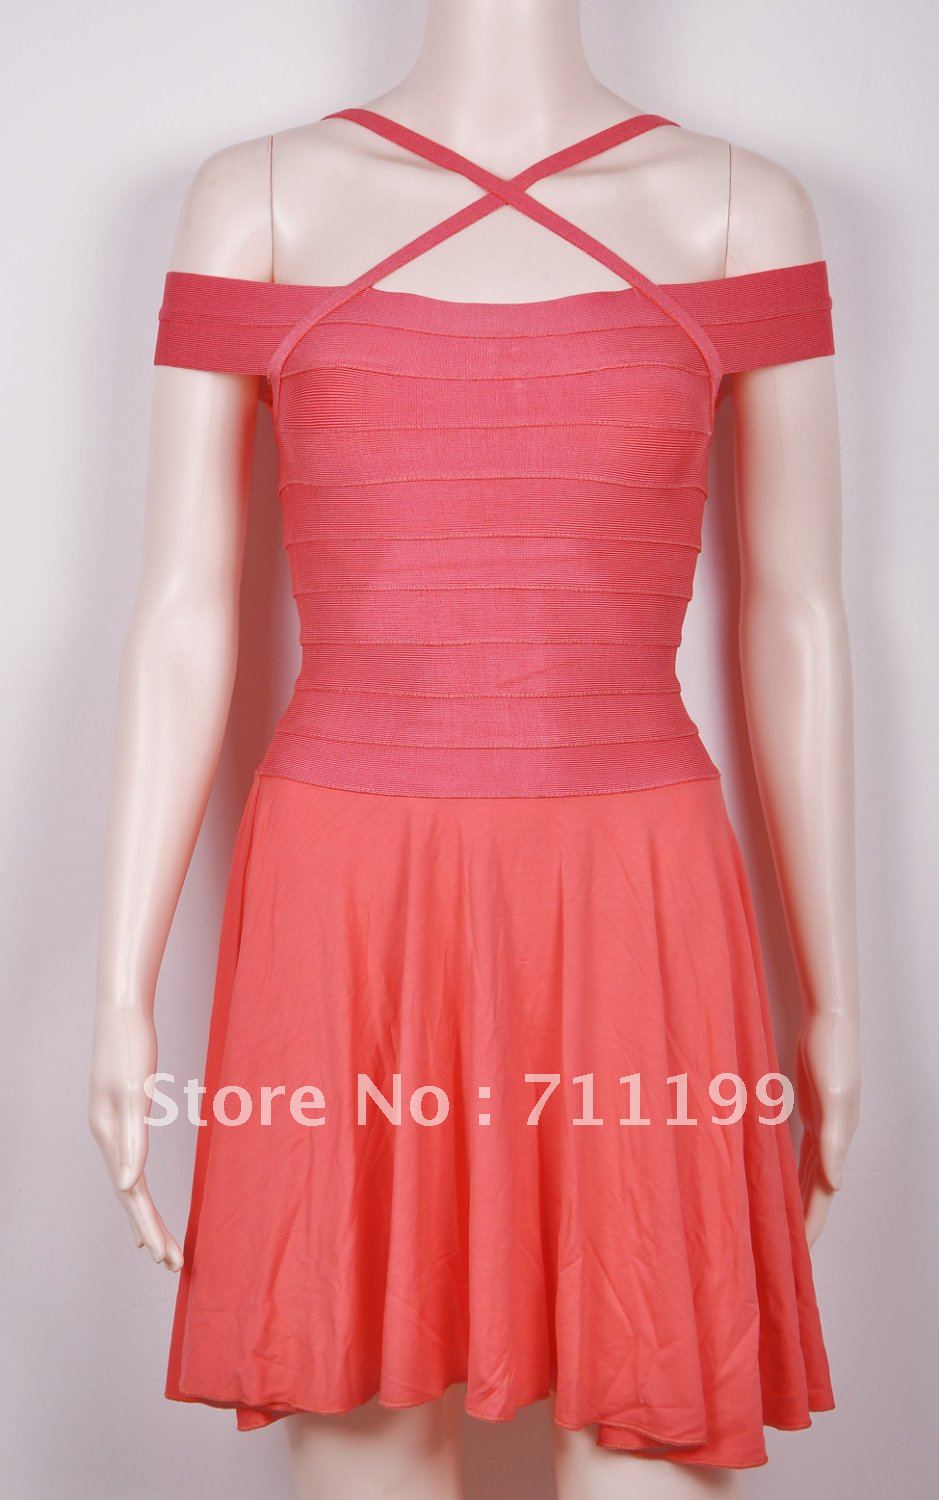 2012 newest style Max Ariza ladies dress red shoulder-straps dress,HL bandage dress,evening wear pengpeng dress,Free shipping